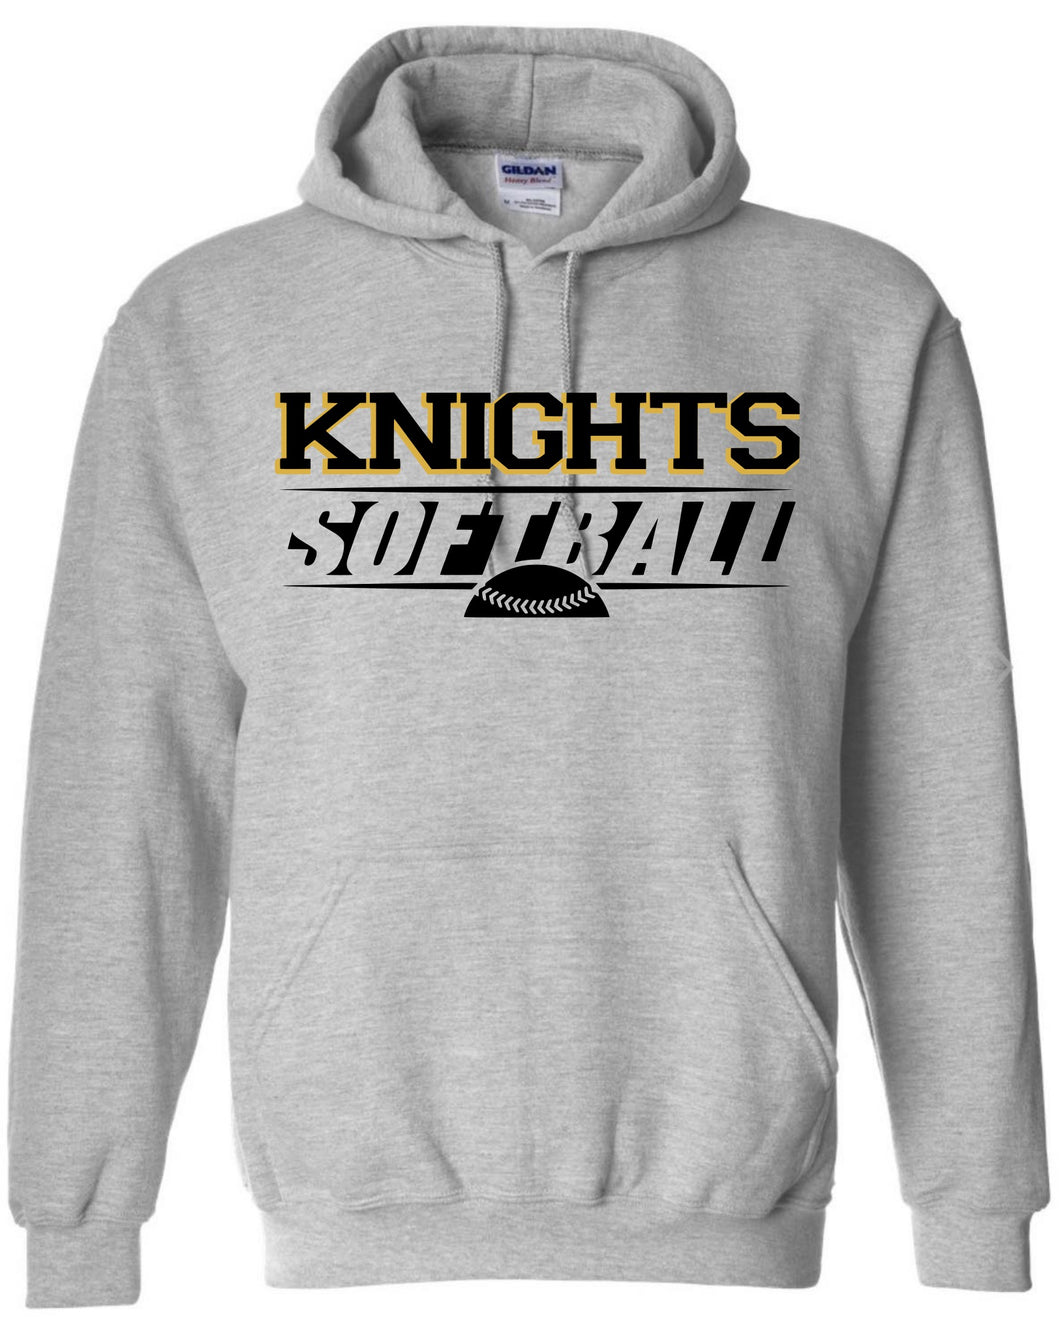 Knights Softball Hoodie